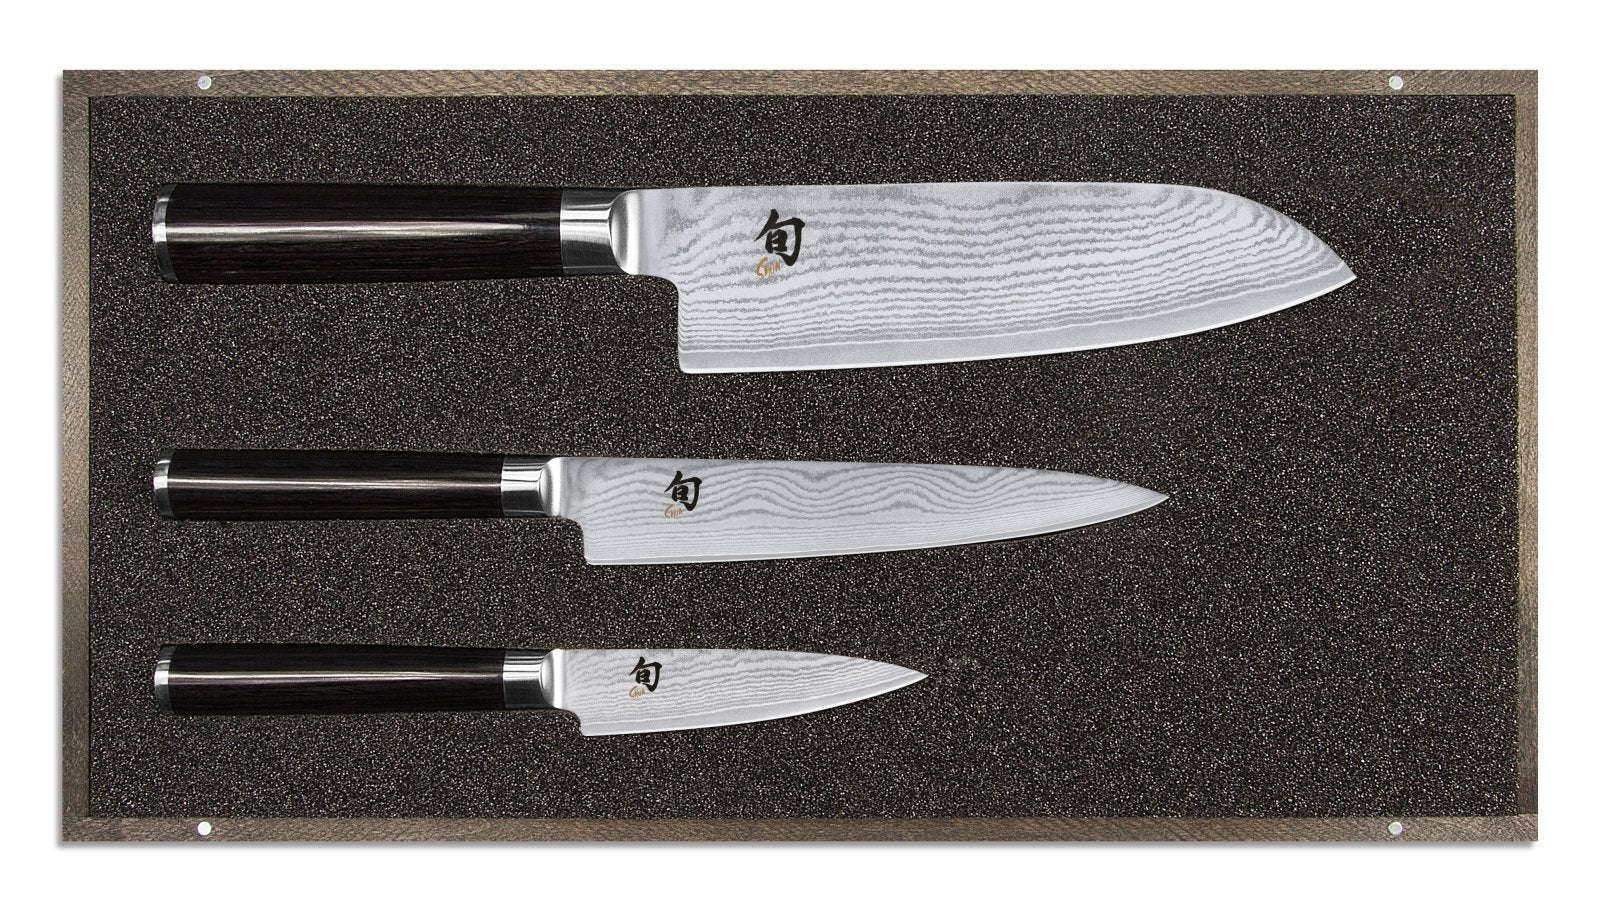 KAI Shun 3 Piece Knife Set - Santoku Knife & Utility Knife & Paring Knife - KAI-DMS-310 - The Cotswold Knife Company